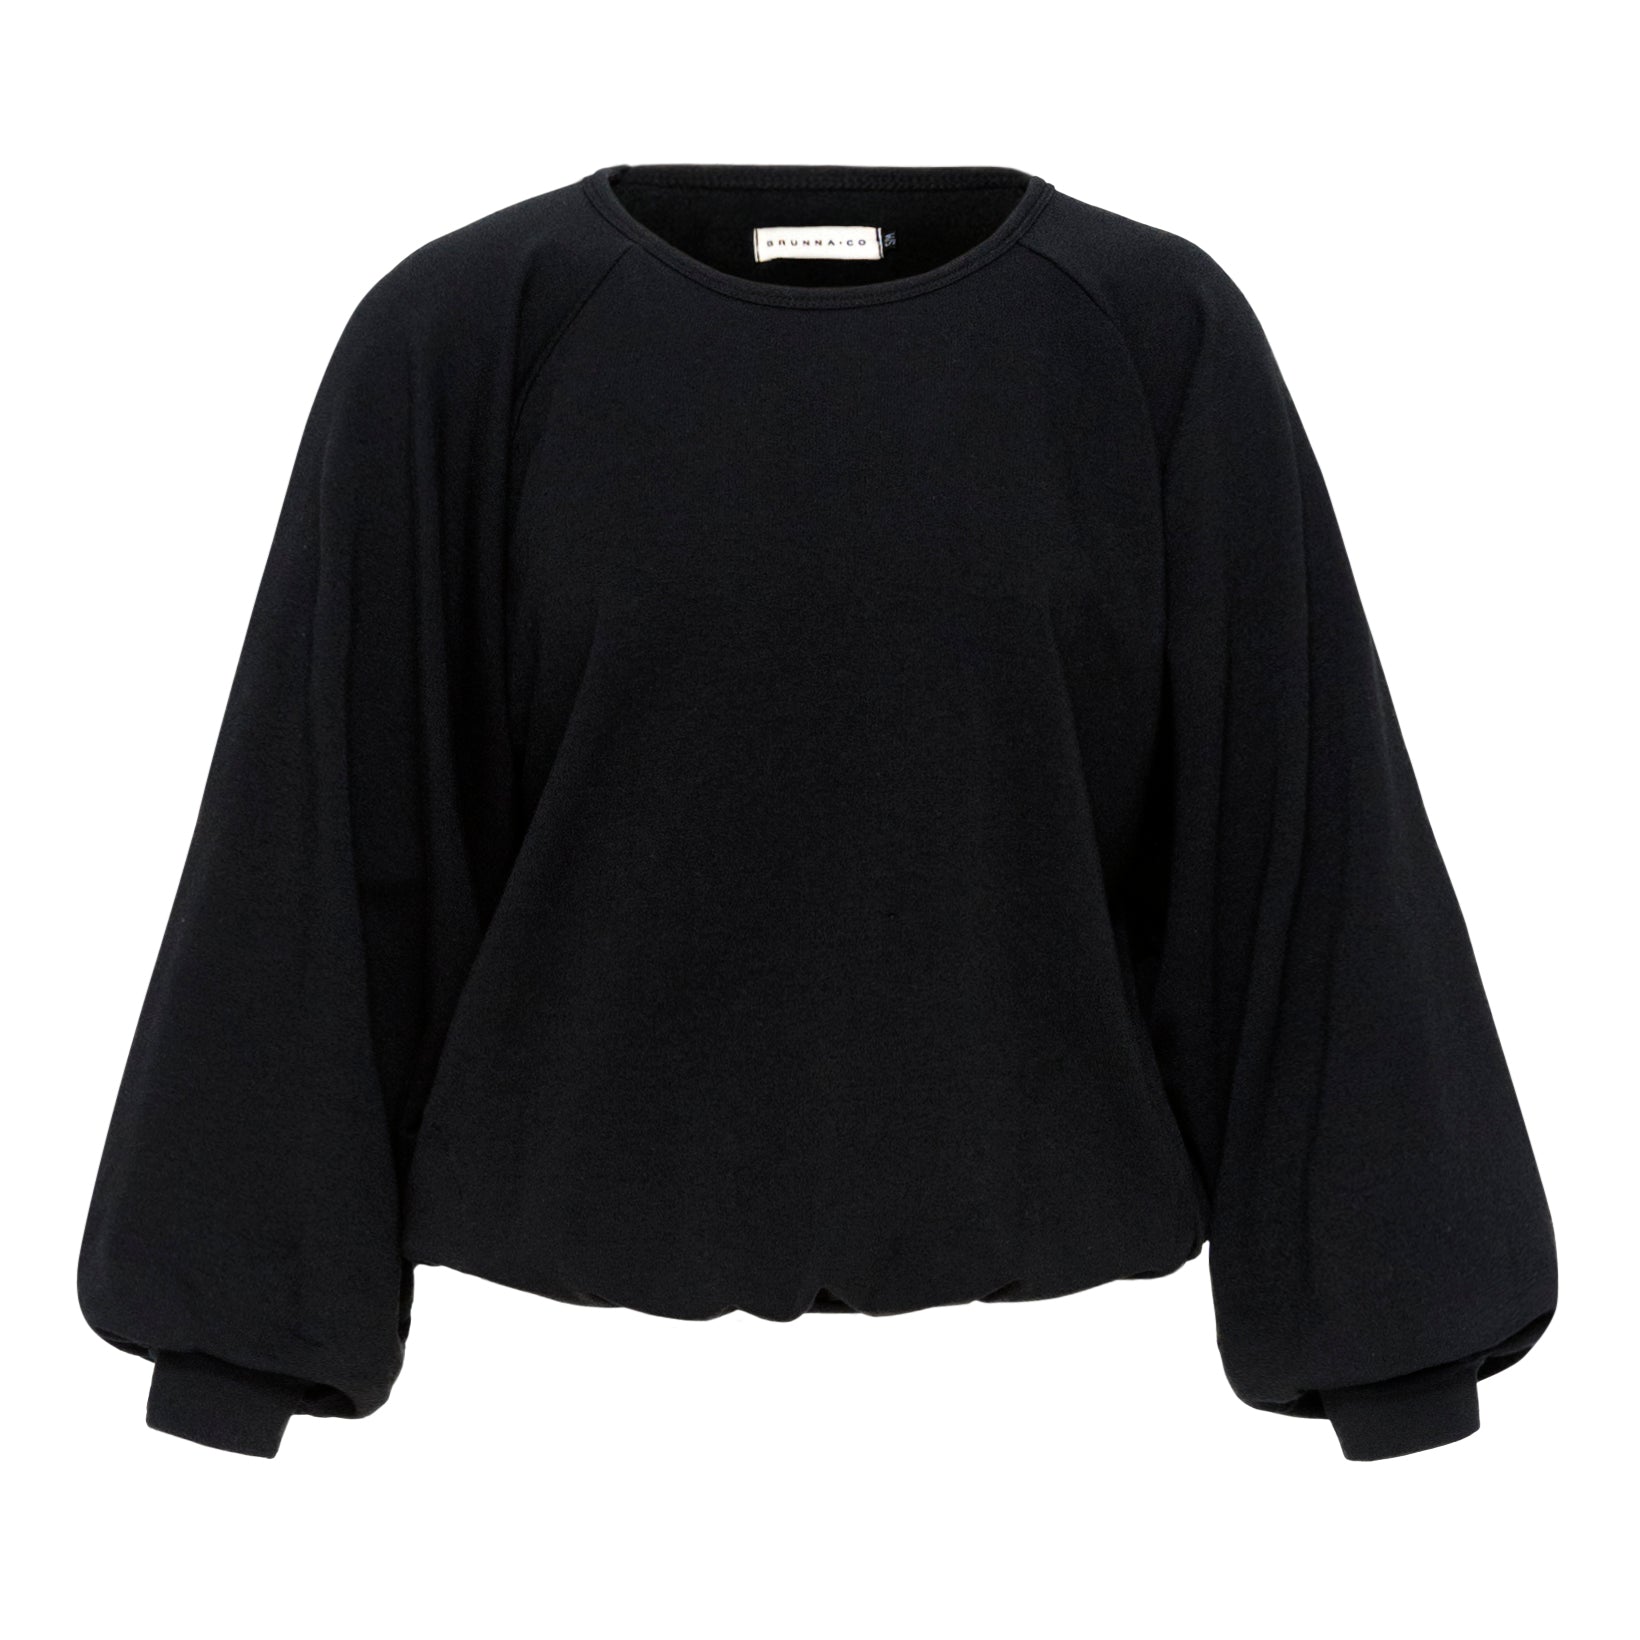 Haley Bamboo Fleece Sweaters, in Black